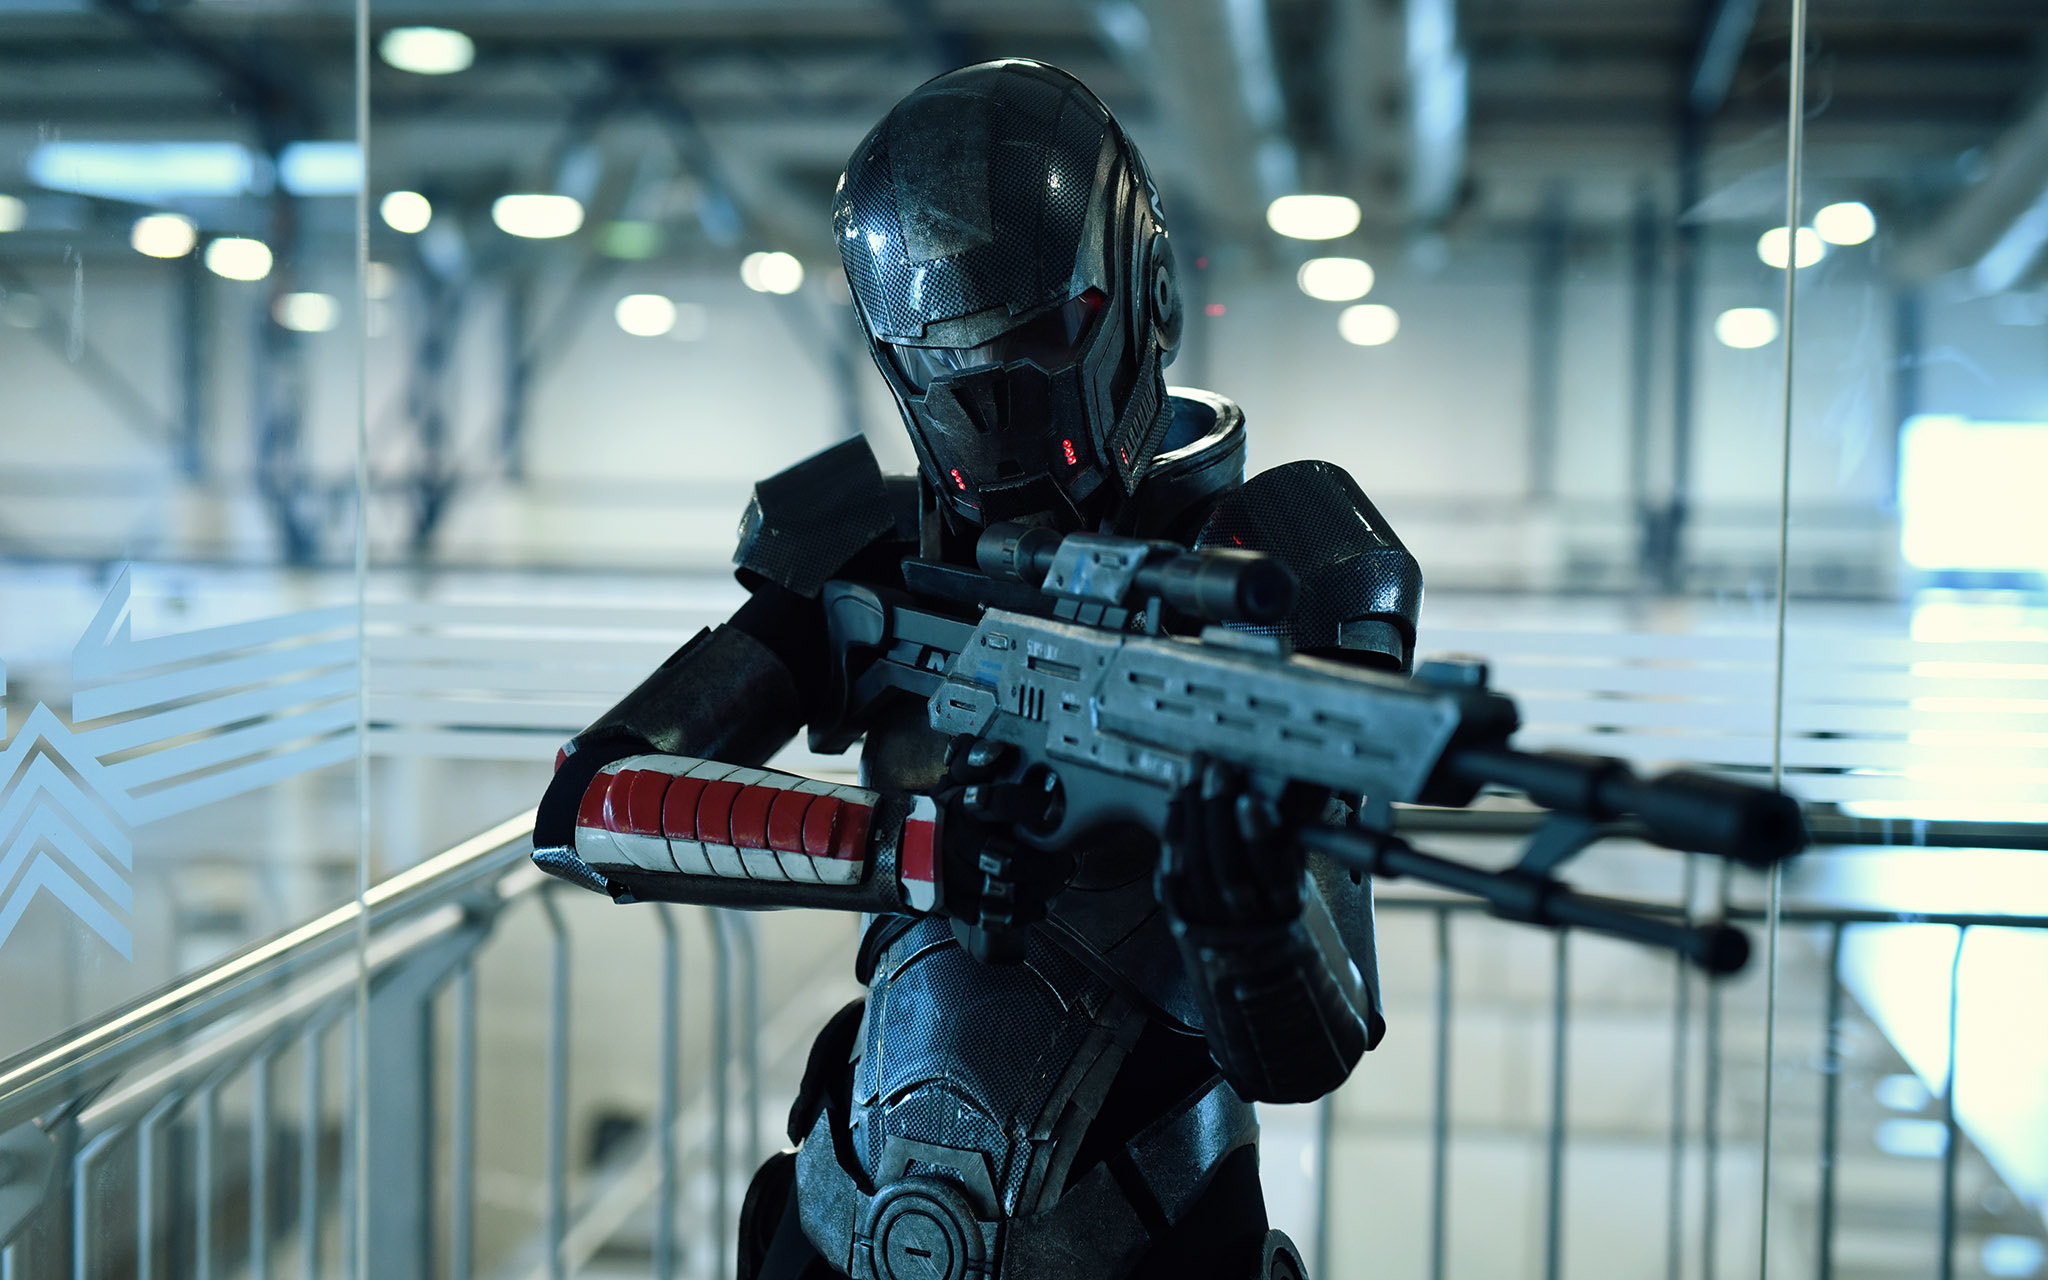 People 2048x1280 500px cosplay Mass Effect futuristic costumes gun N7